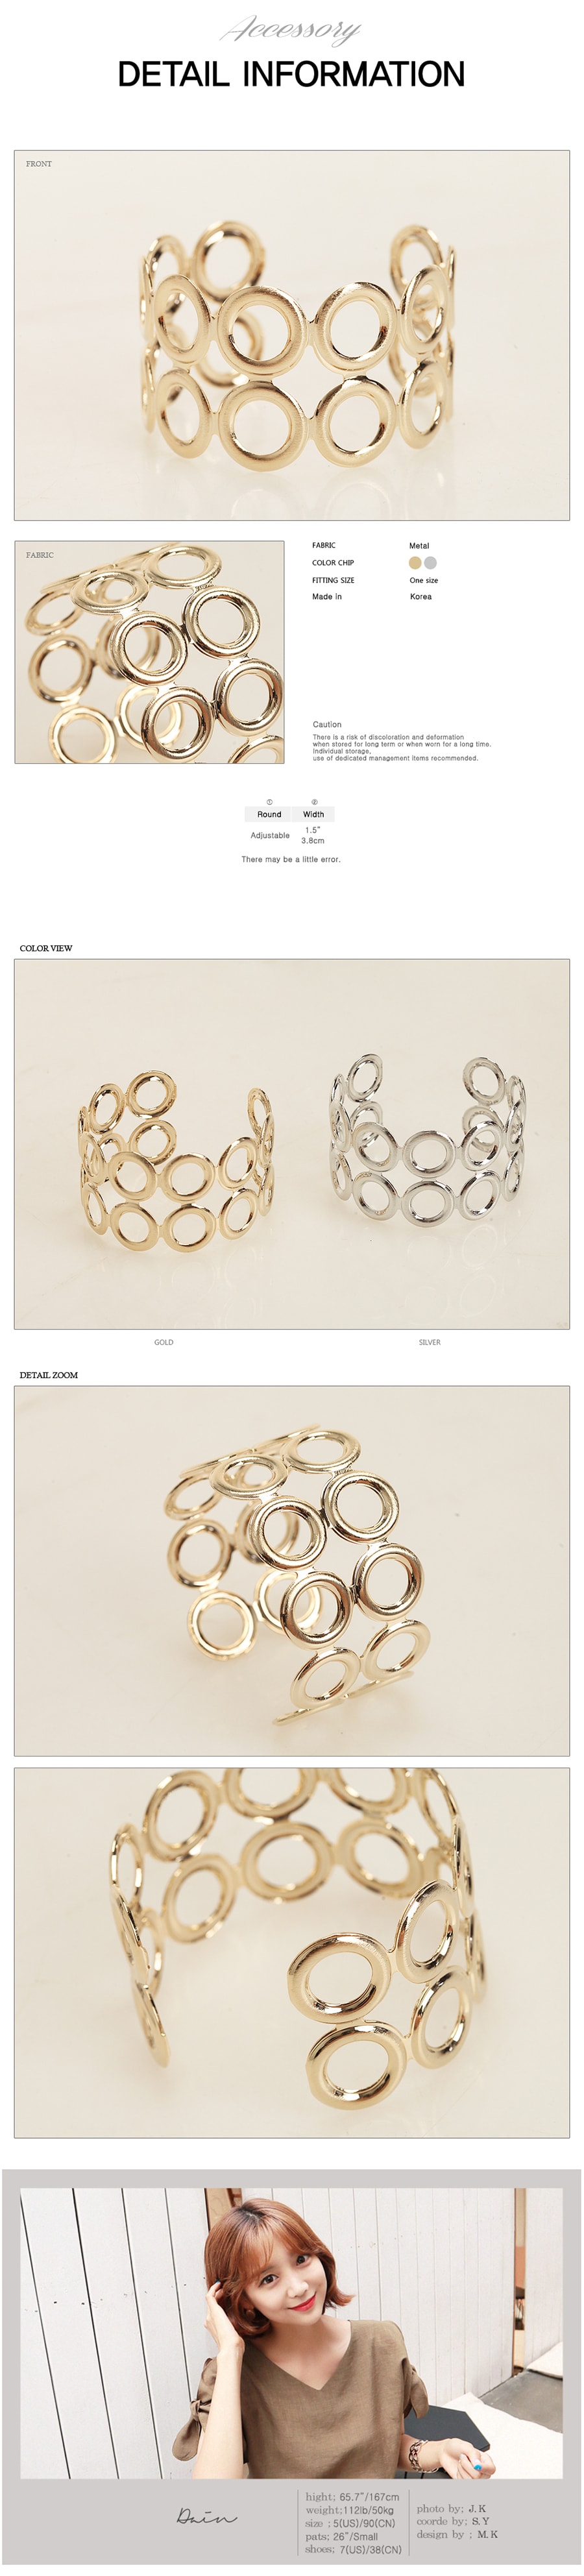 KOREA Stainless Steel 88-Shaped Cuff Bangle Bracelet Gold [Free Shipping]